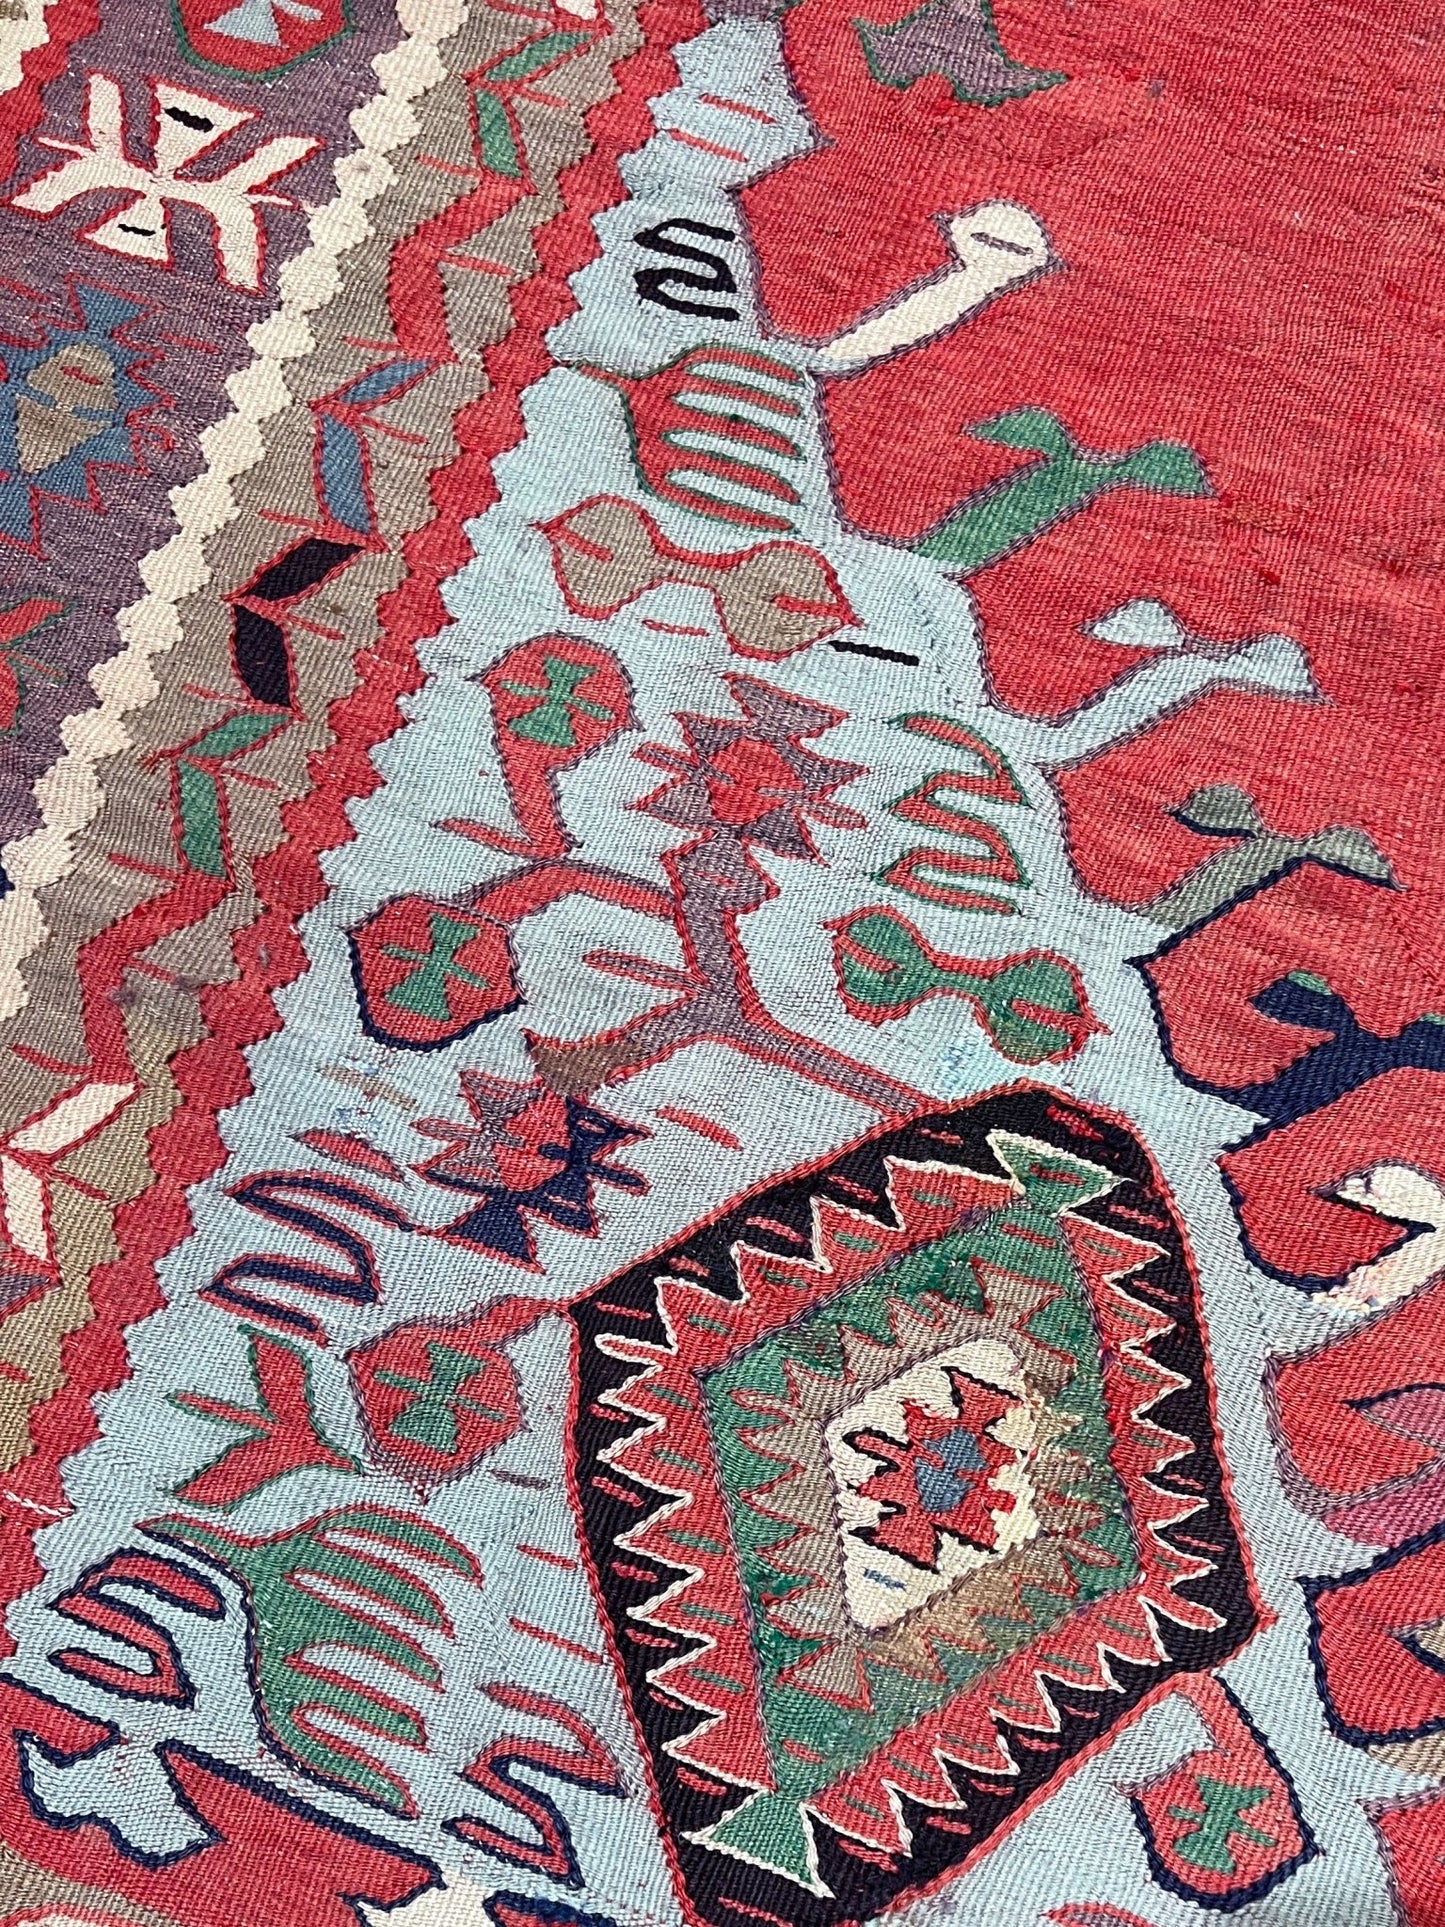 oushak turkish kilim rug. Oriental rug shop palo alto los altos San mateo. Turkish rug shop online free shipping.